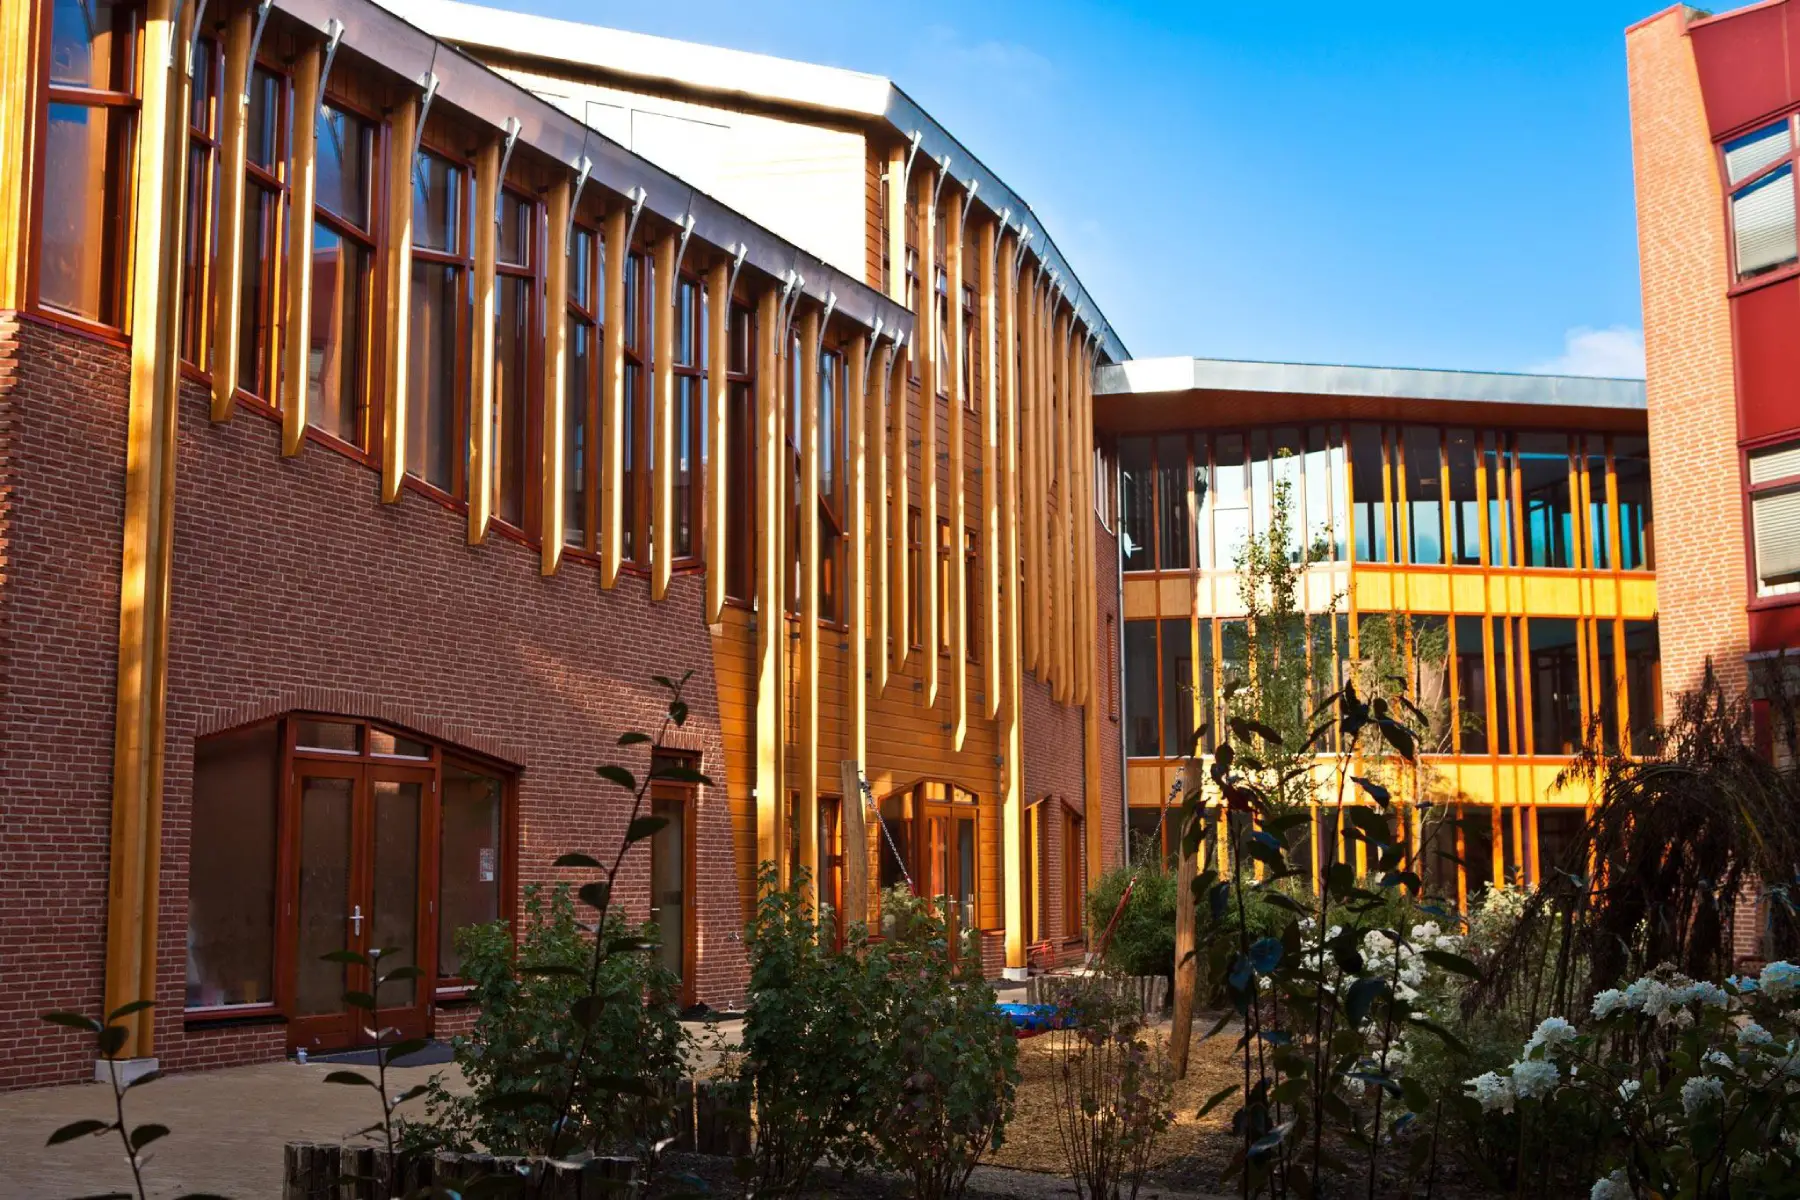 An exterior shot of the International School of Amsterdam